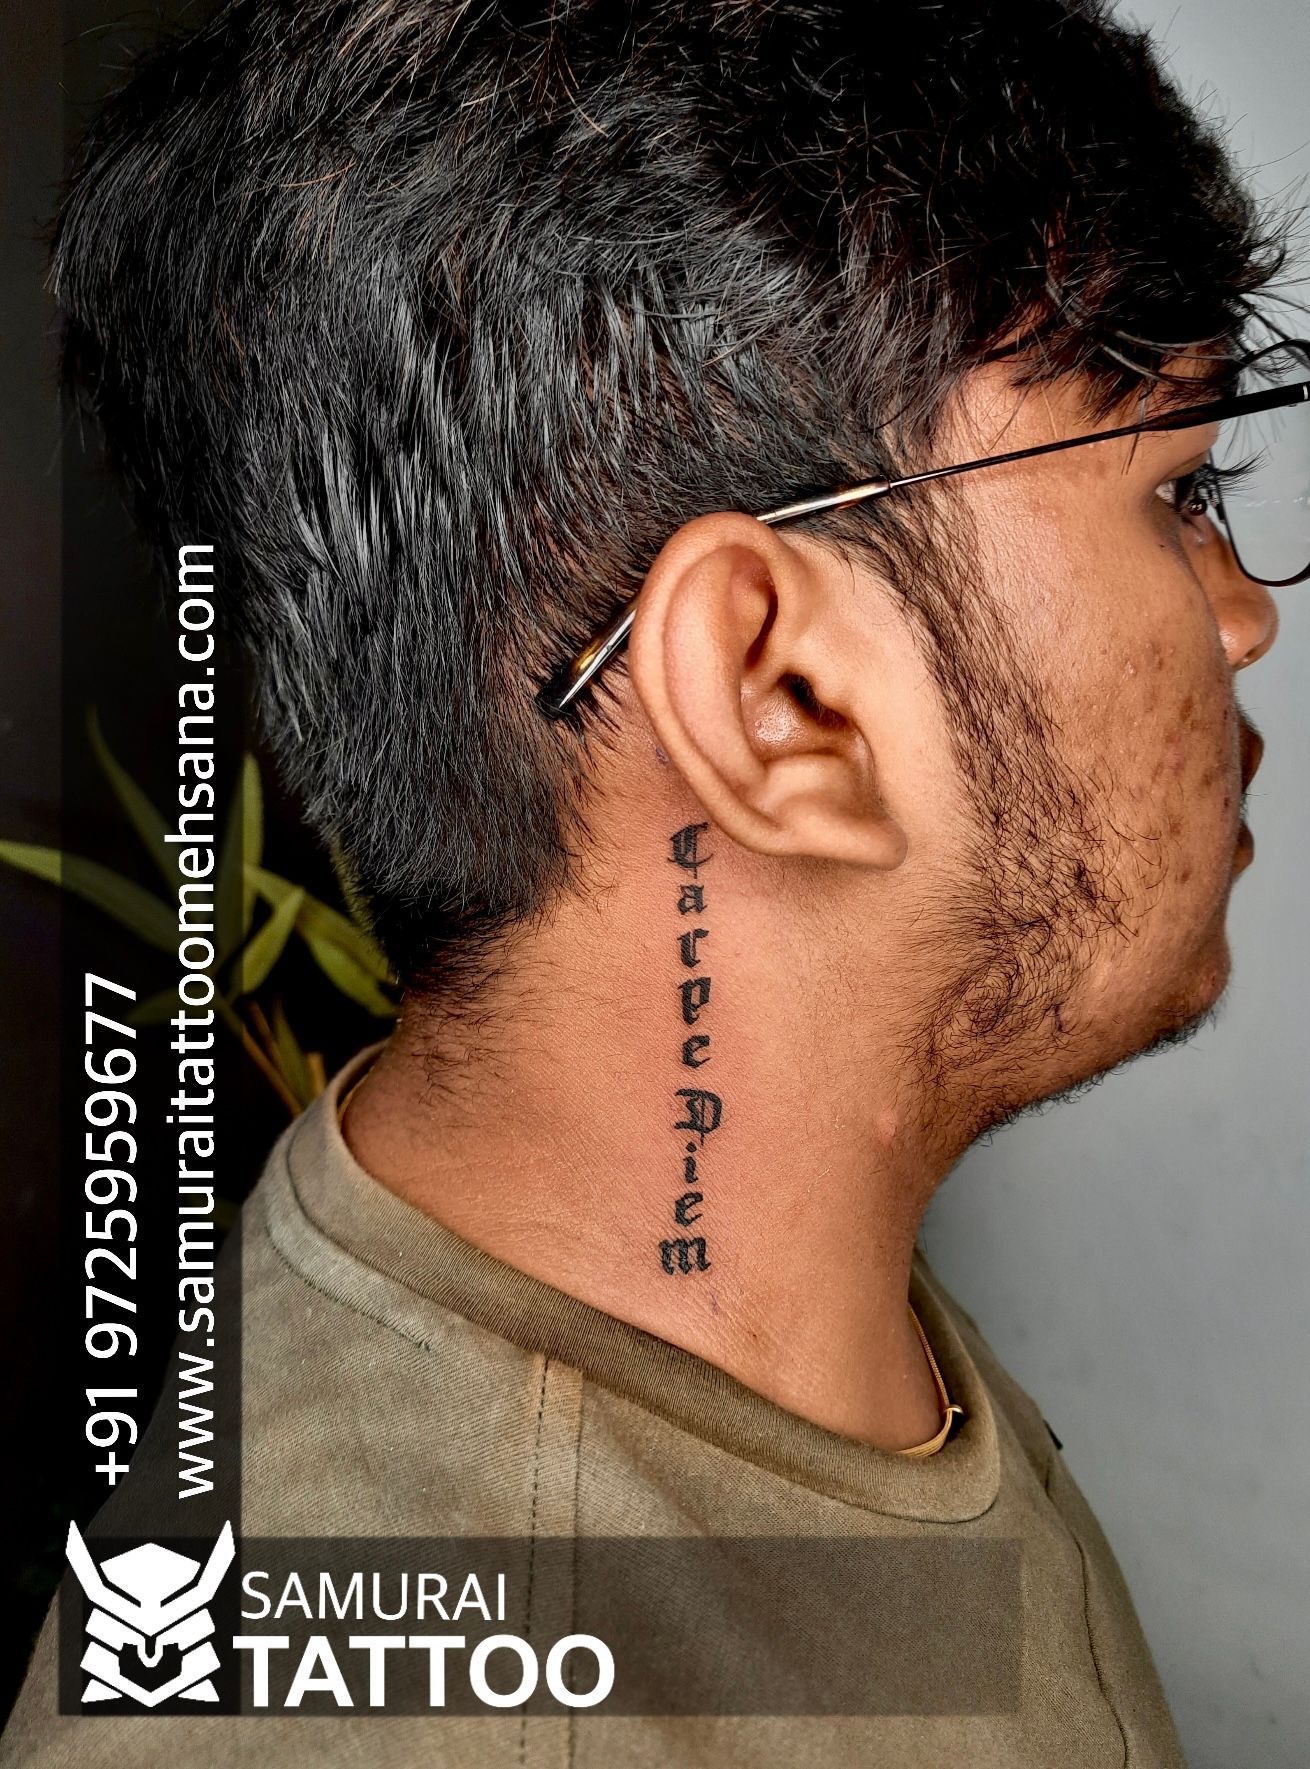 Tattoo uploaded by Vipul Chaudhary • Carpediem tattoo |Carpediem name tattoo  |Carpediem tattoo design • Tattoodo